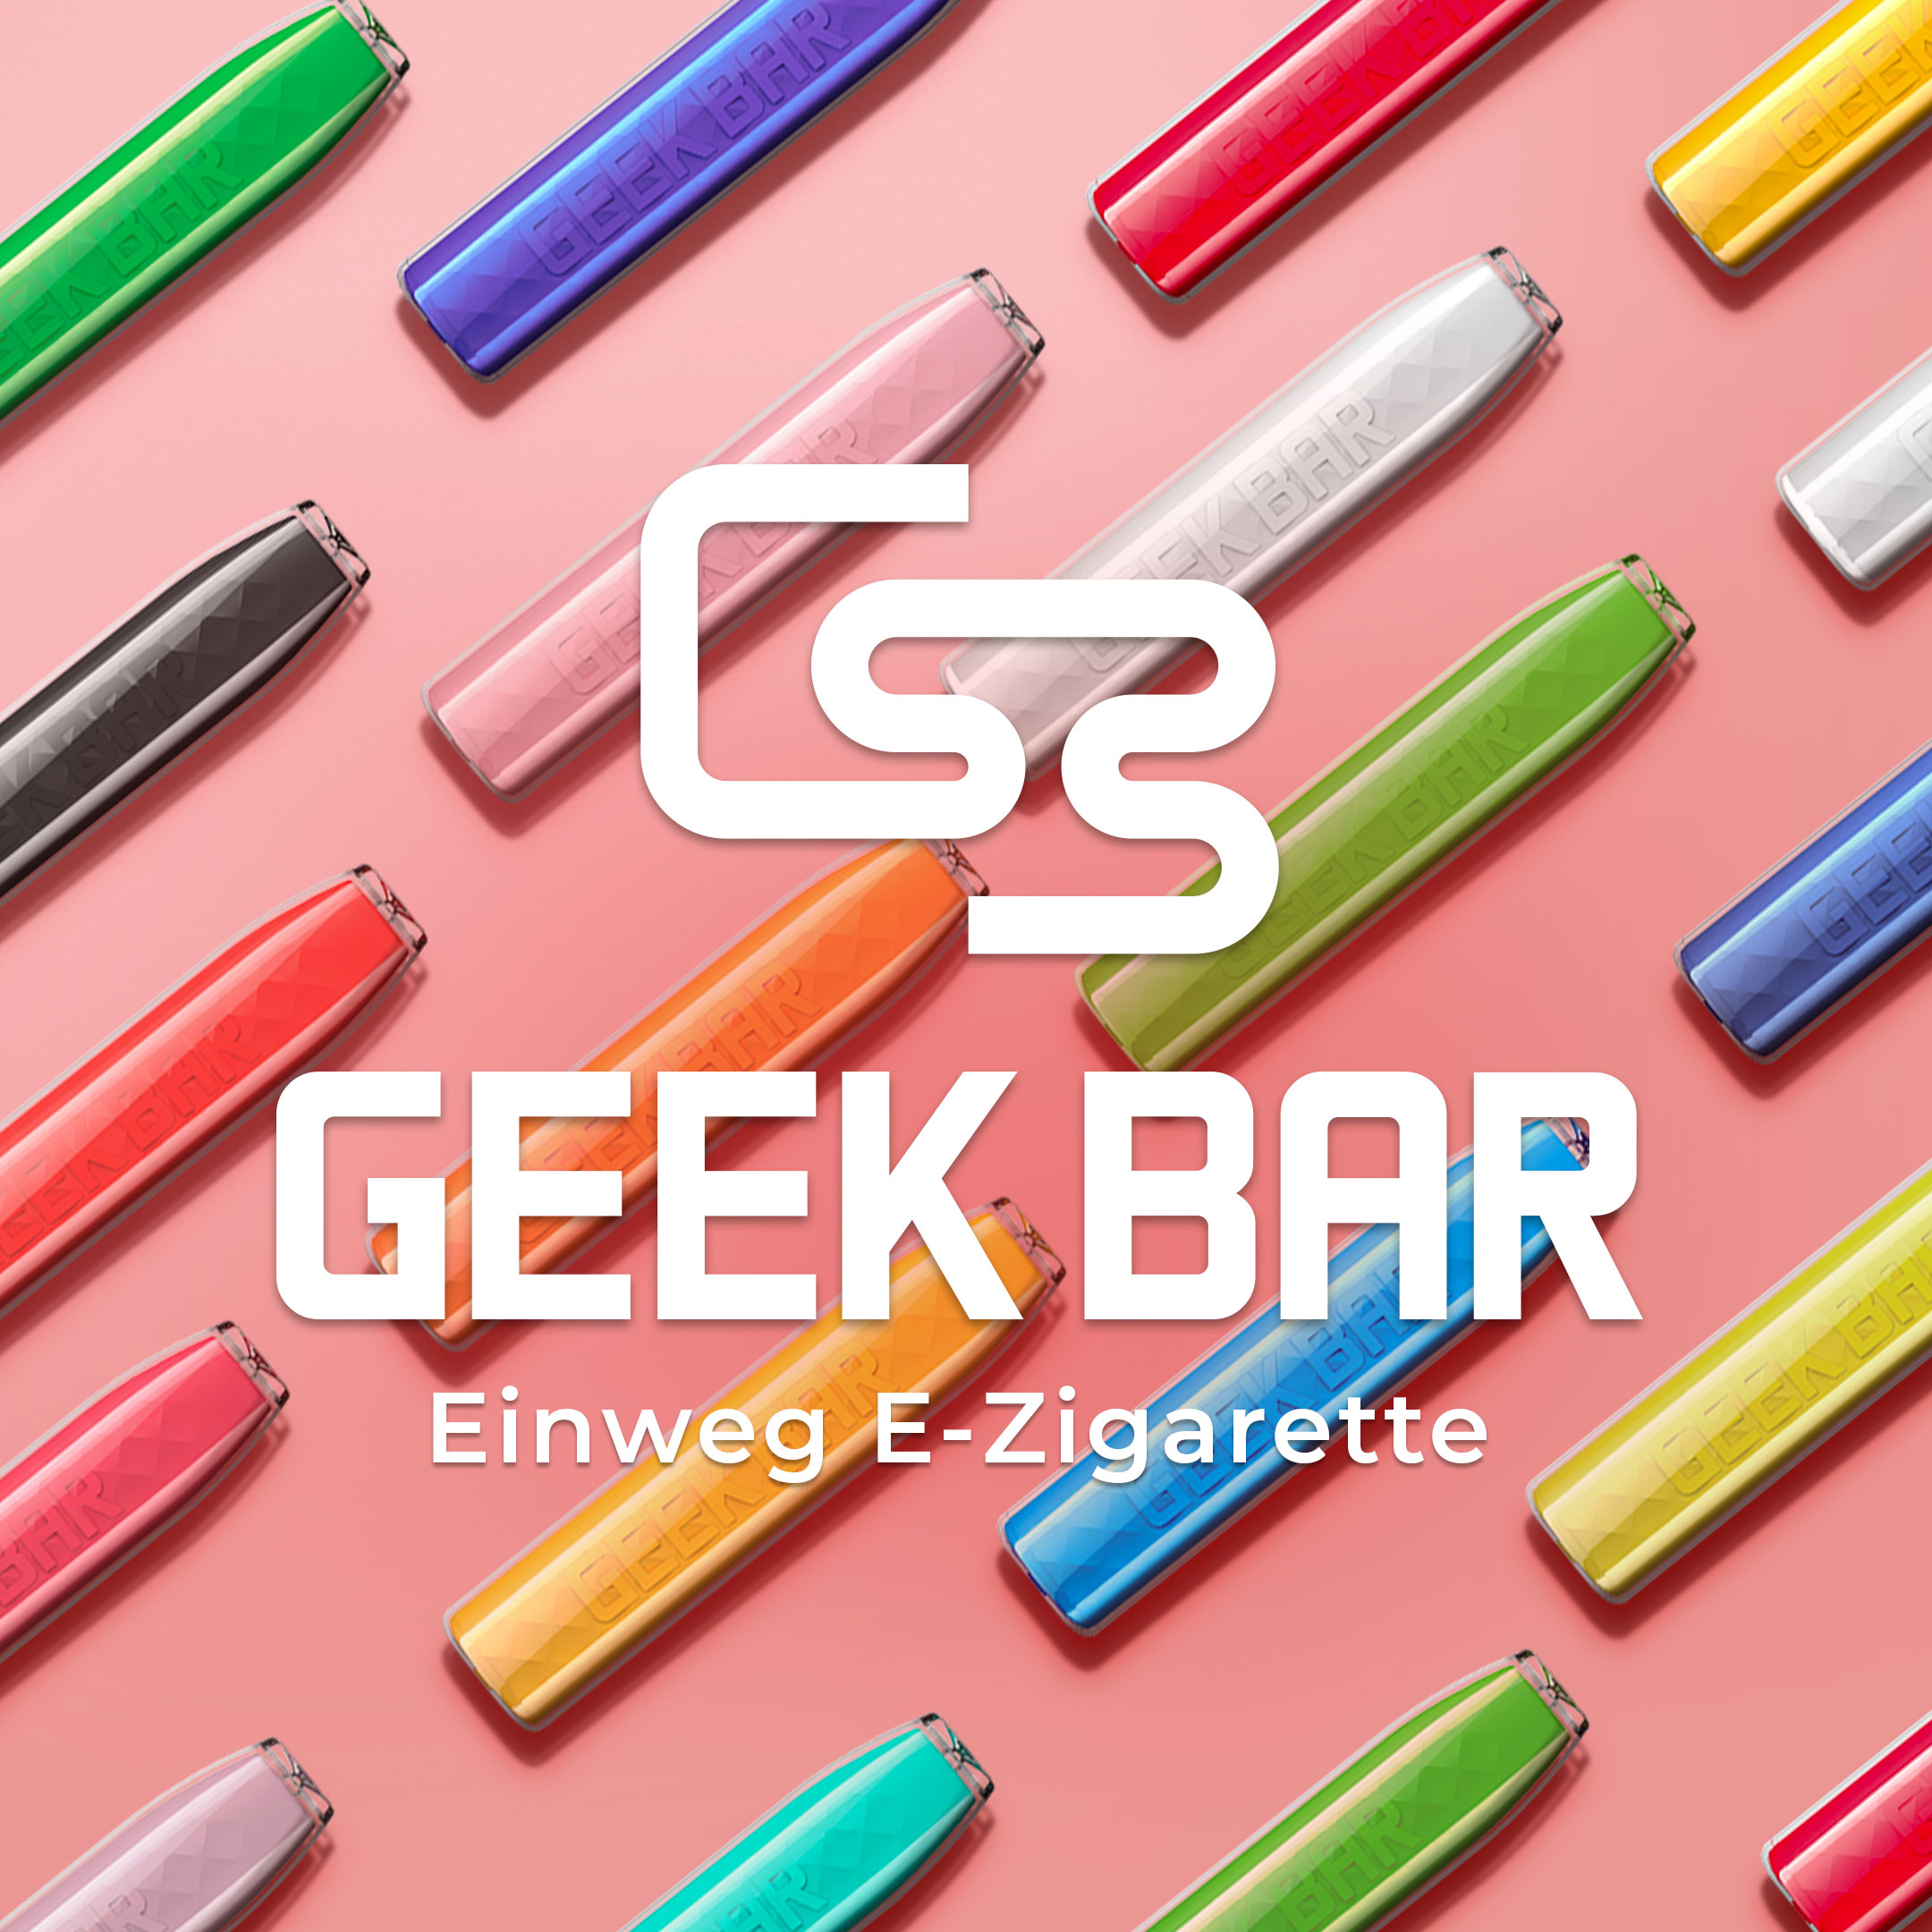 GEEKBAR by Geekvape - Einweg E-Zigarette Vape Pen 20mg/ml Lychee ICE